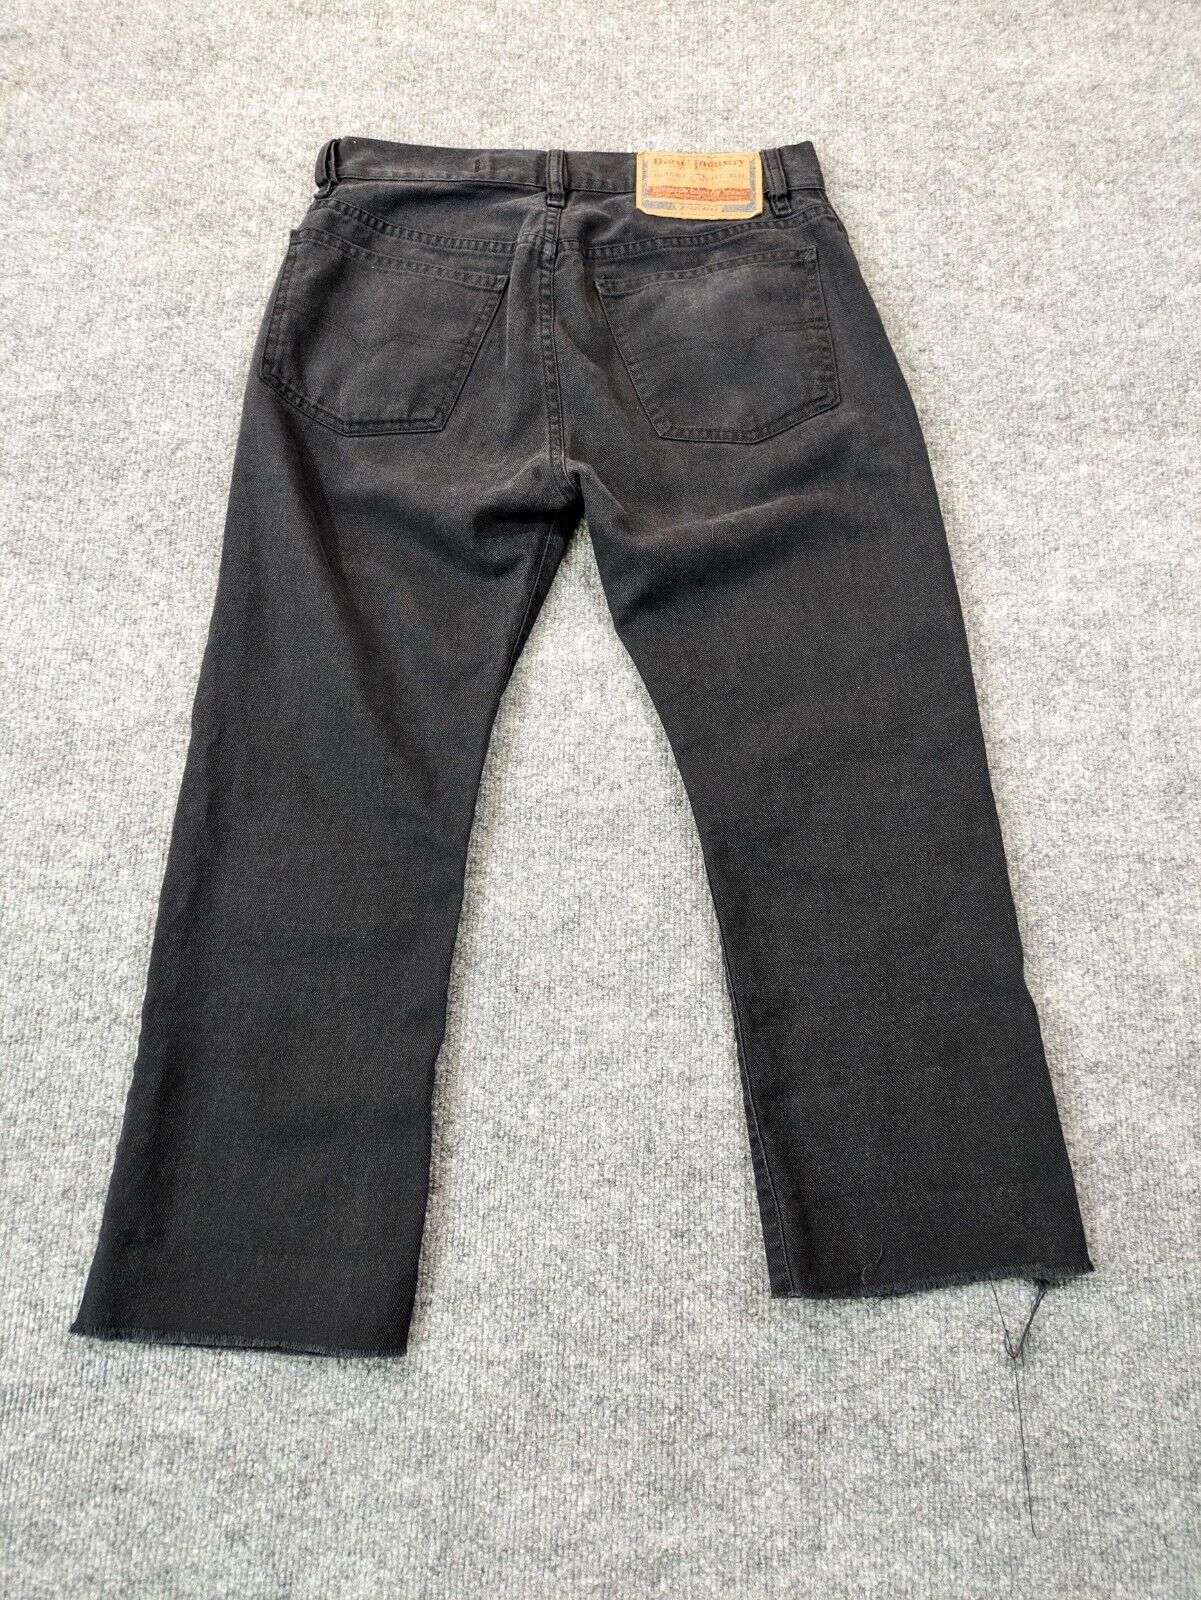 Diesel Industry 29x21 Fanker Faded Y2K Jeans Made In Italy Casual Black